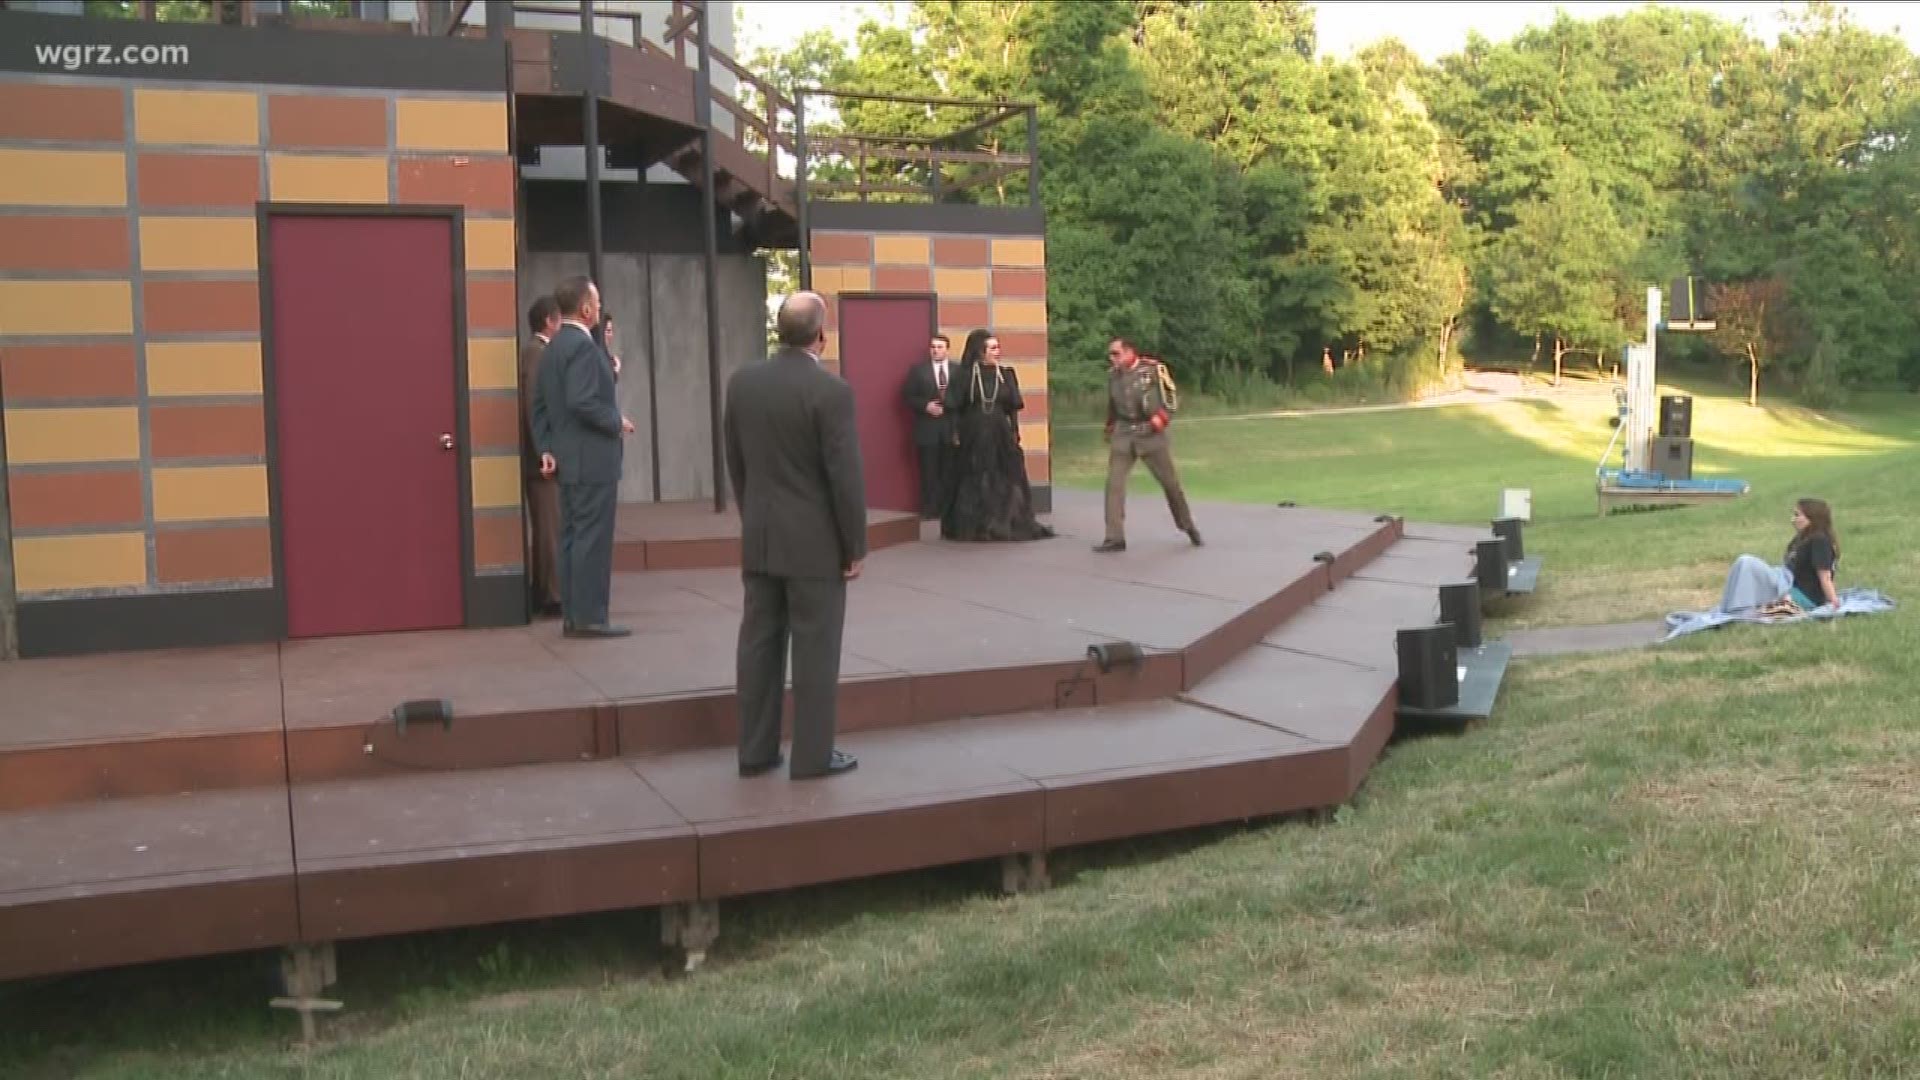 Shakespeare in the Park season begins